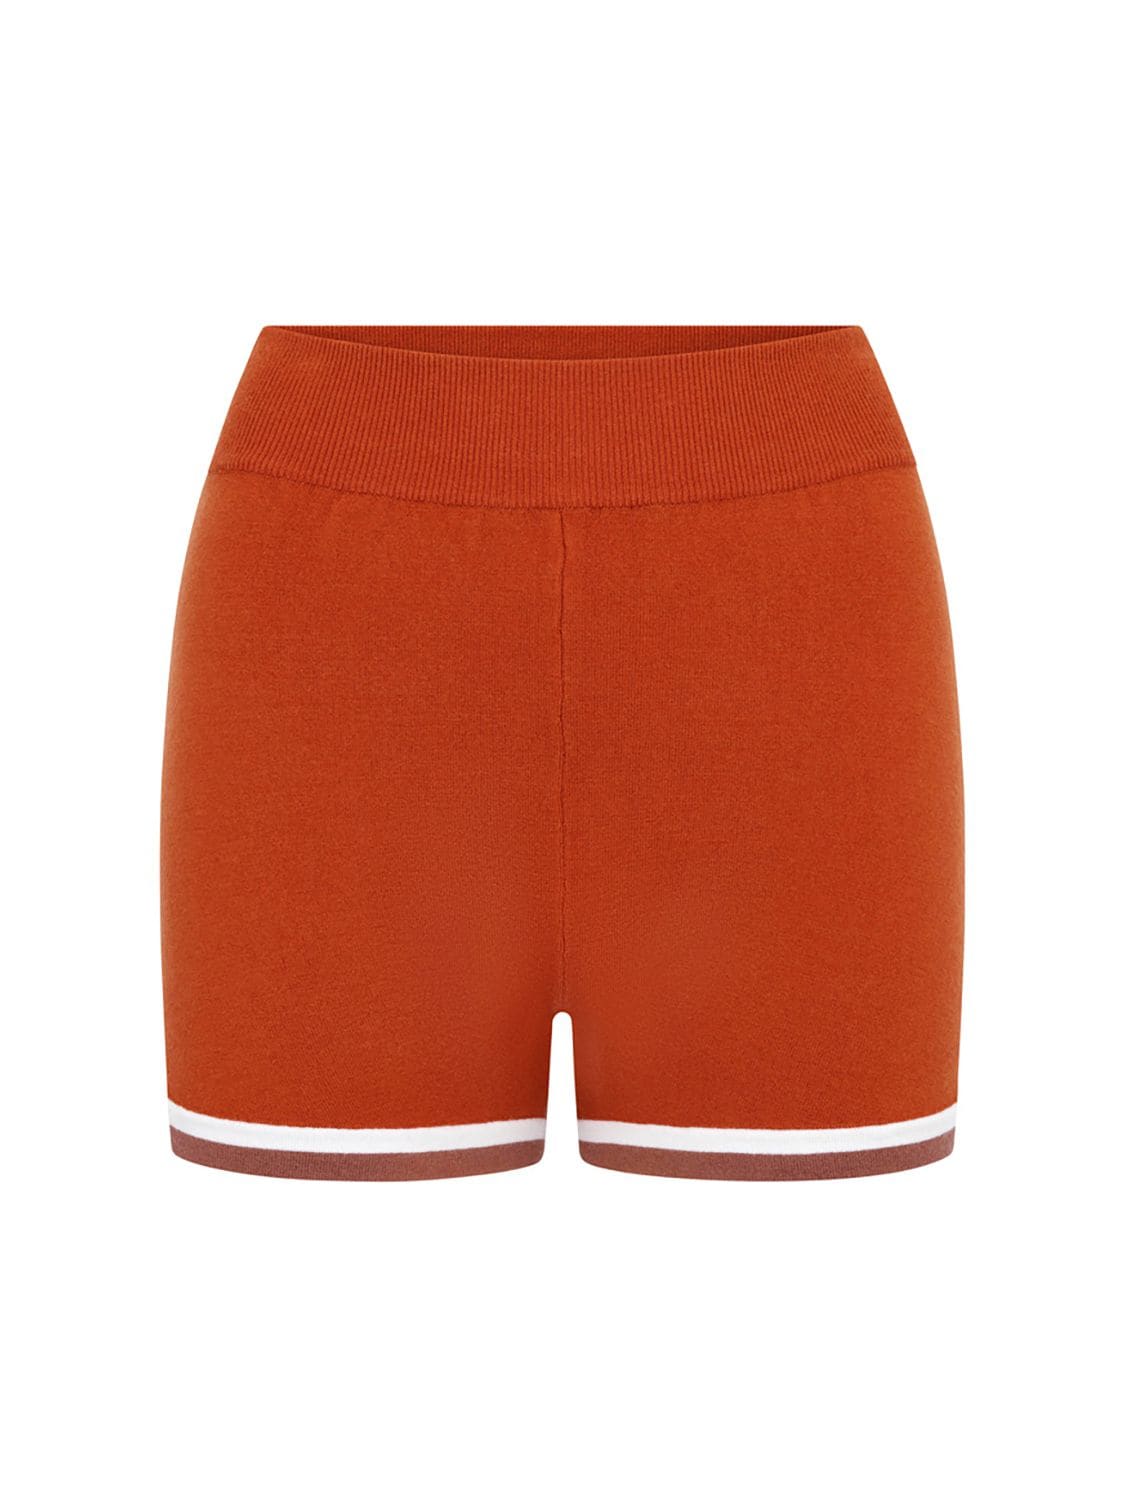 Image of Retro Wool Blend Shorts